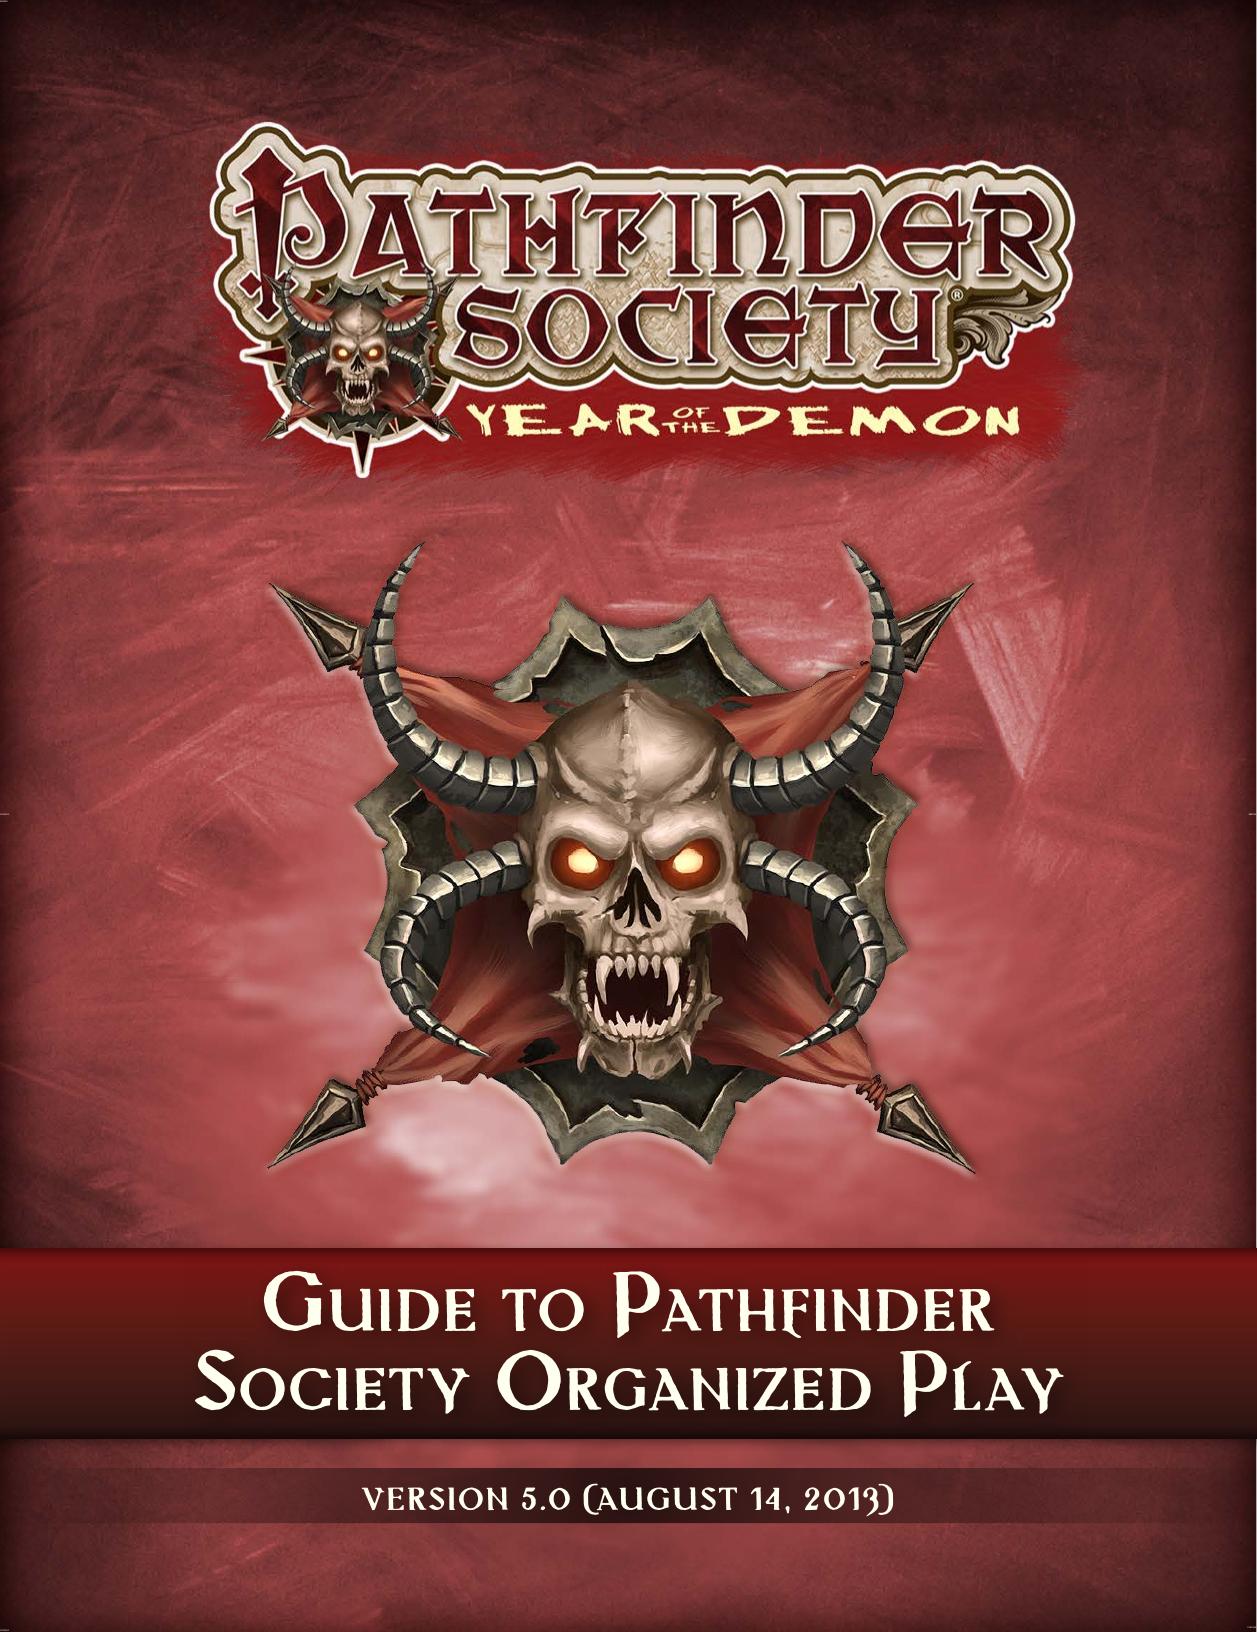 Guide to Pathfinder Society Organized Play (v5.0)